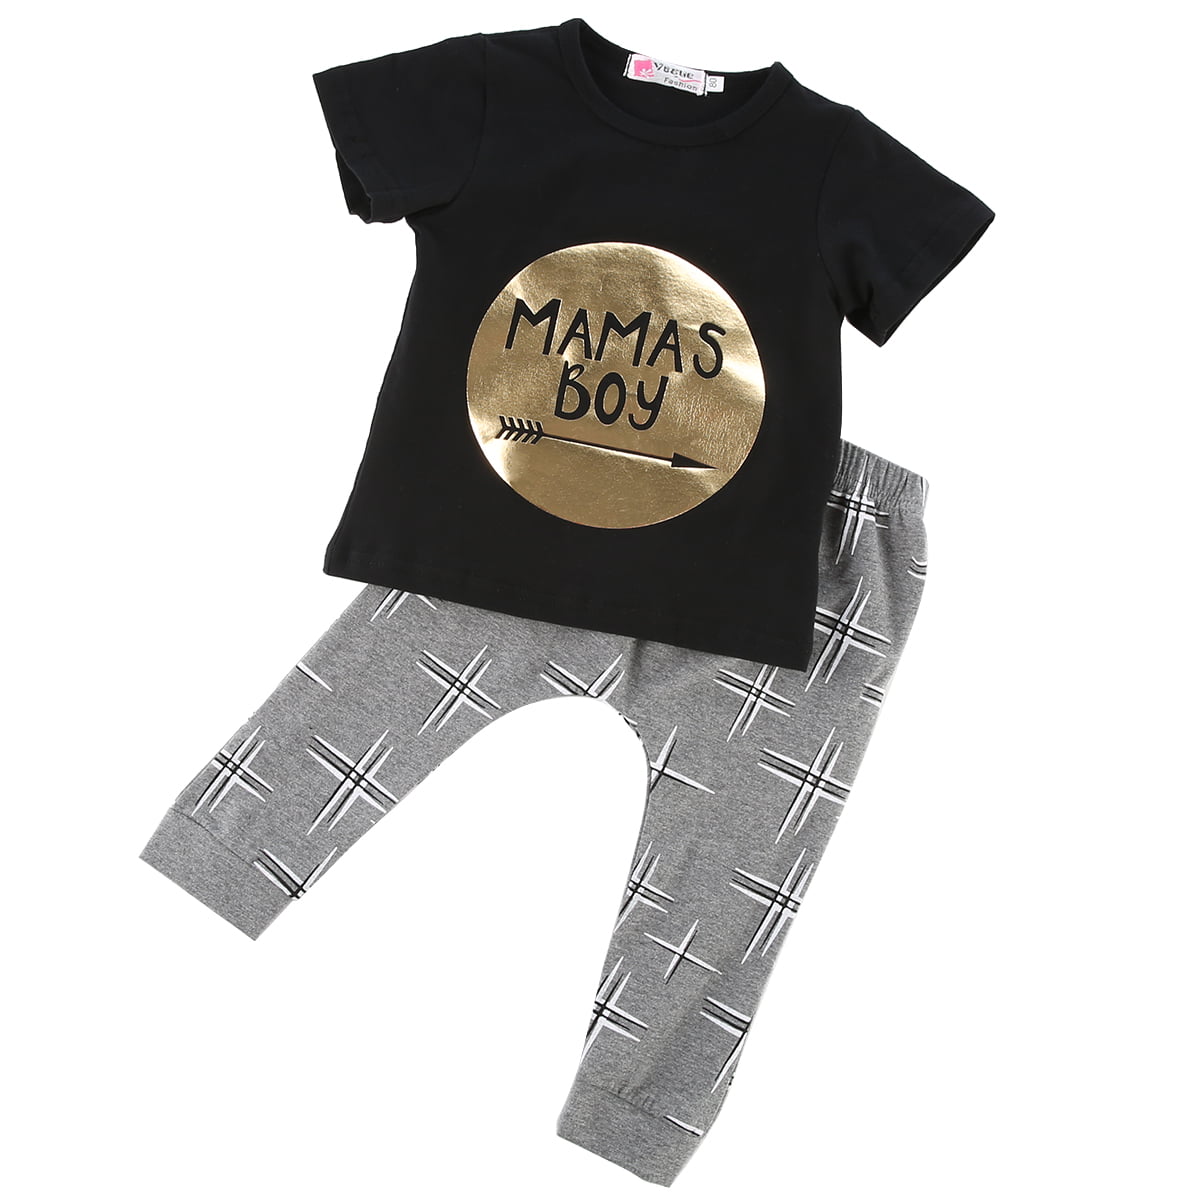 2Pcs Newborn Infant Baby MAMAS Boy Clothes Set Toddler Boy T-shirt Tops+Pants